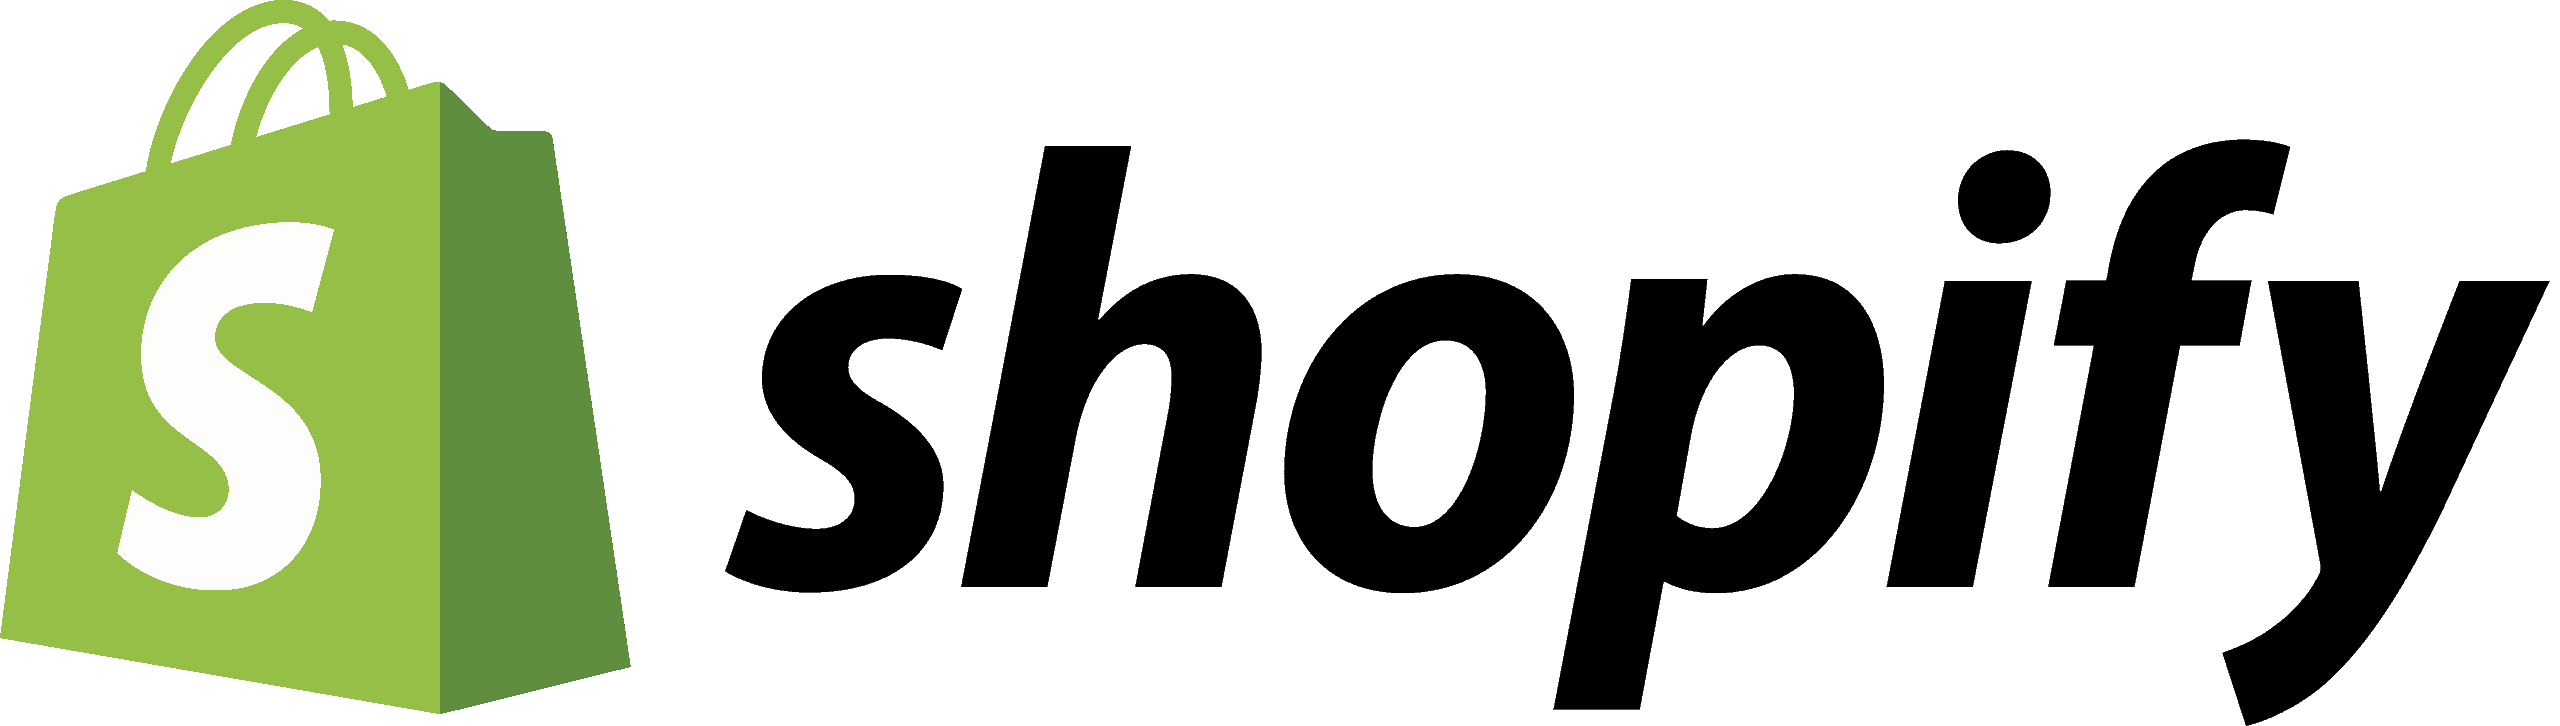 2560px-Shopify_logo_2018.svg